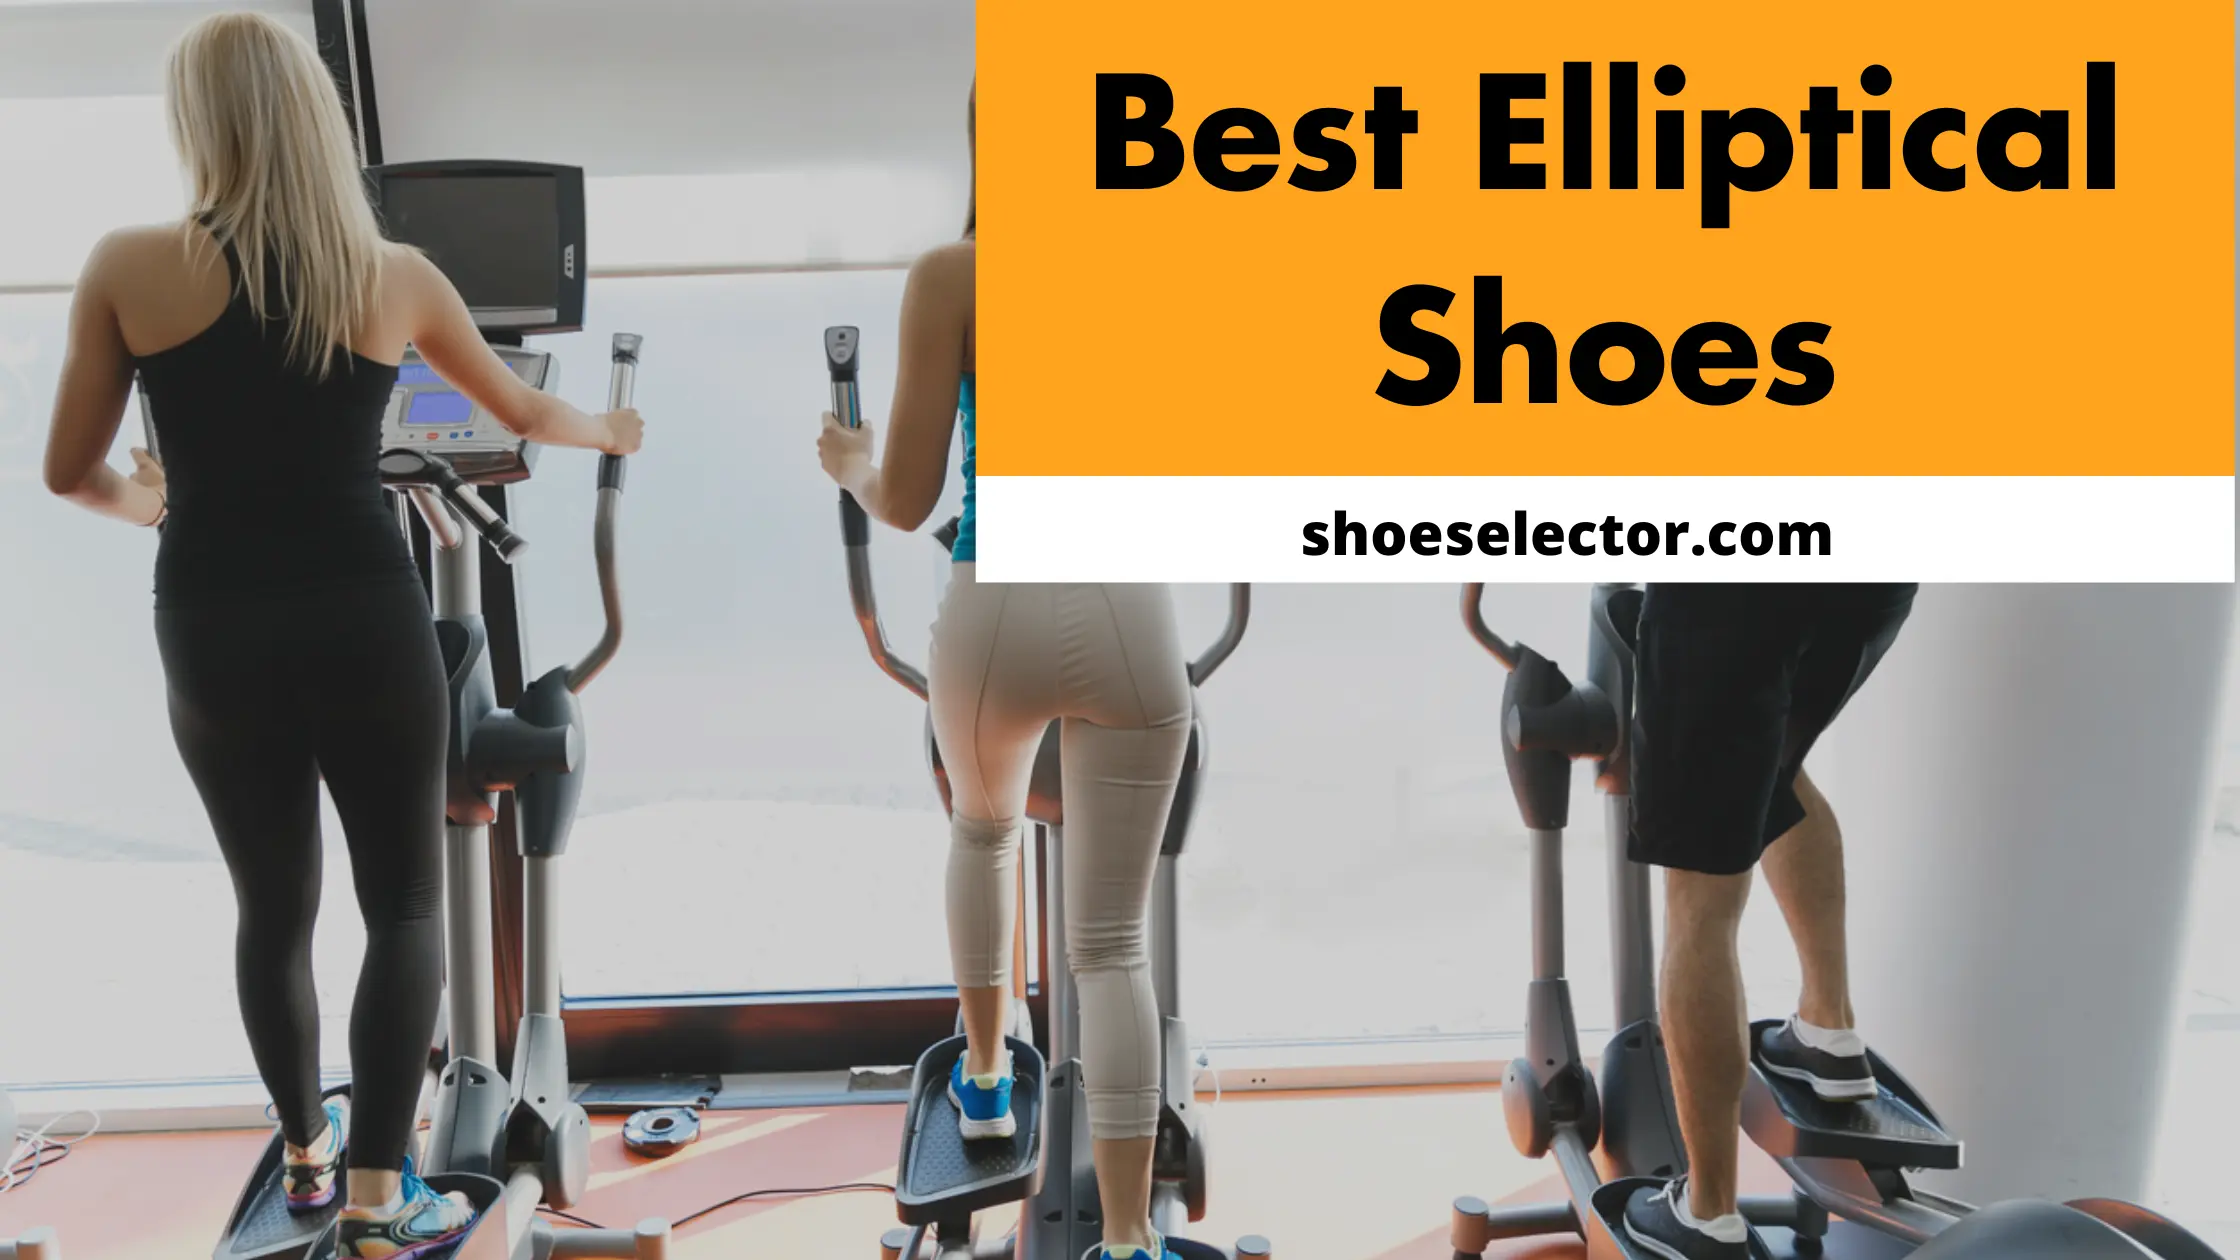 Best Elliptical Shoes - Comprehensive Guide